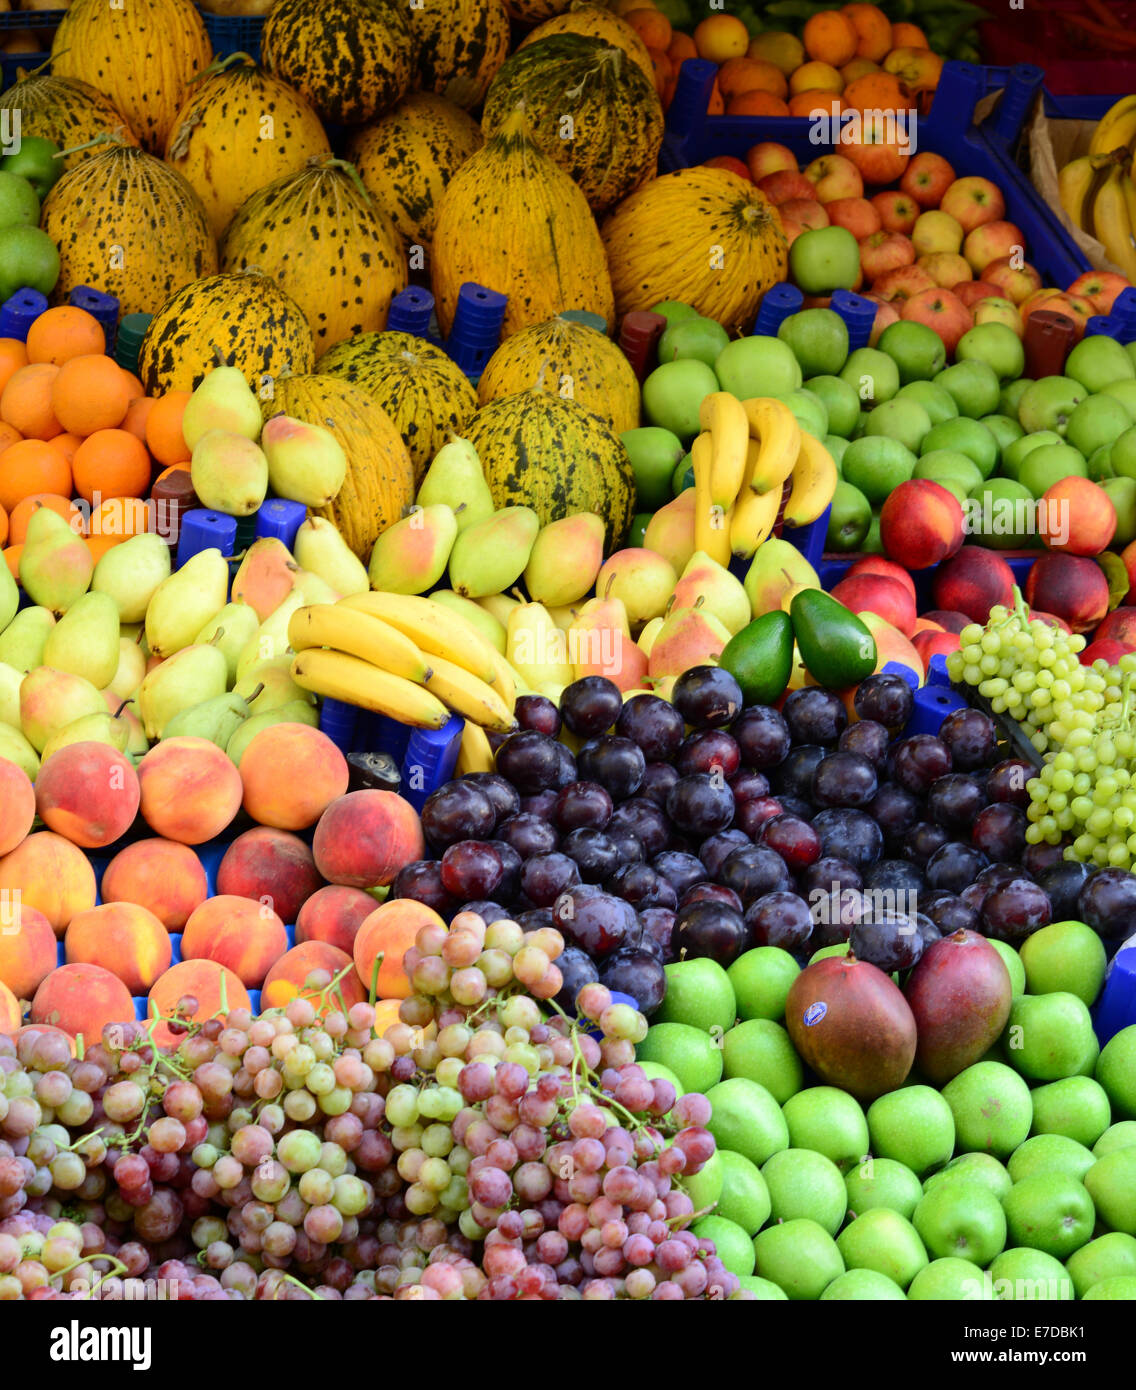 https://c8.alamy.com/comp/E7DBK1/market-with-various-colorful-fresh-fruits-and-vegetables-E7DBK1.jpg